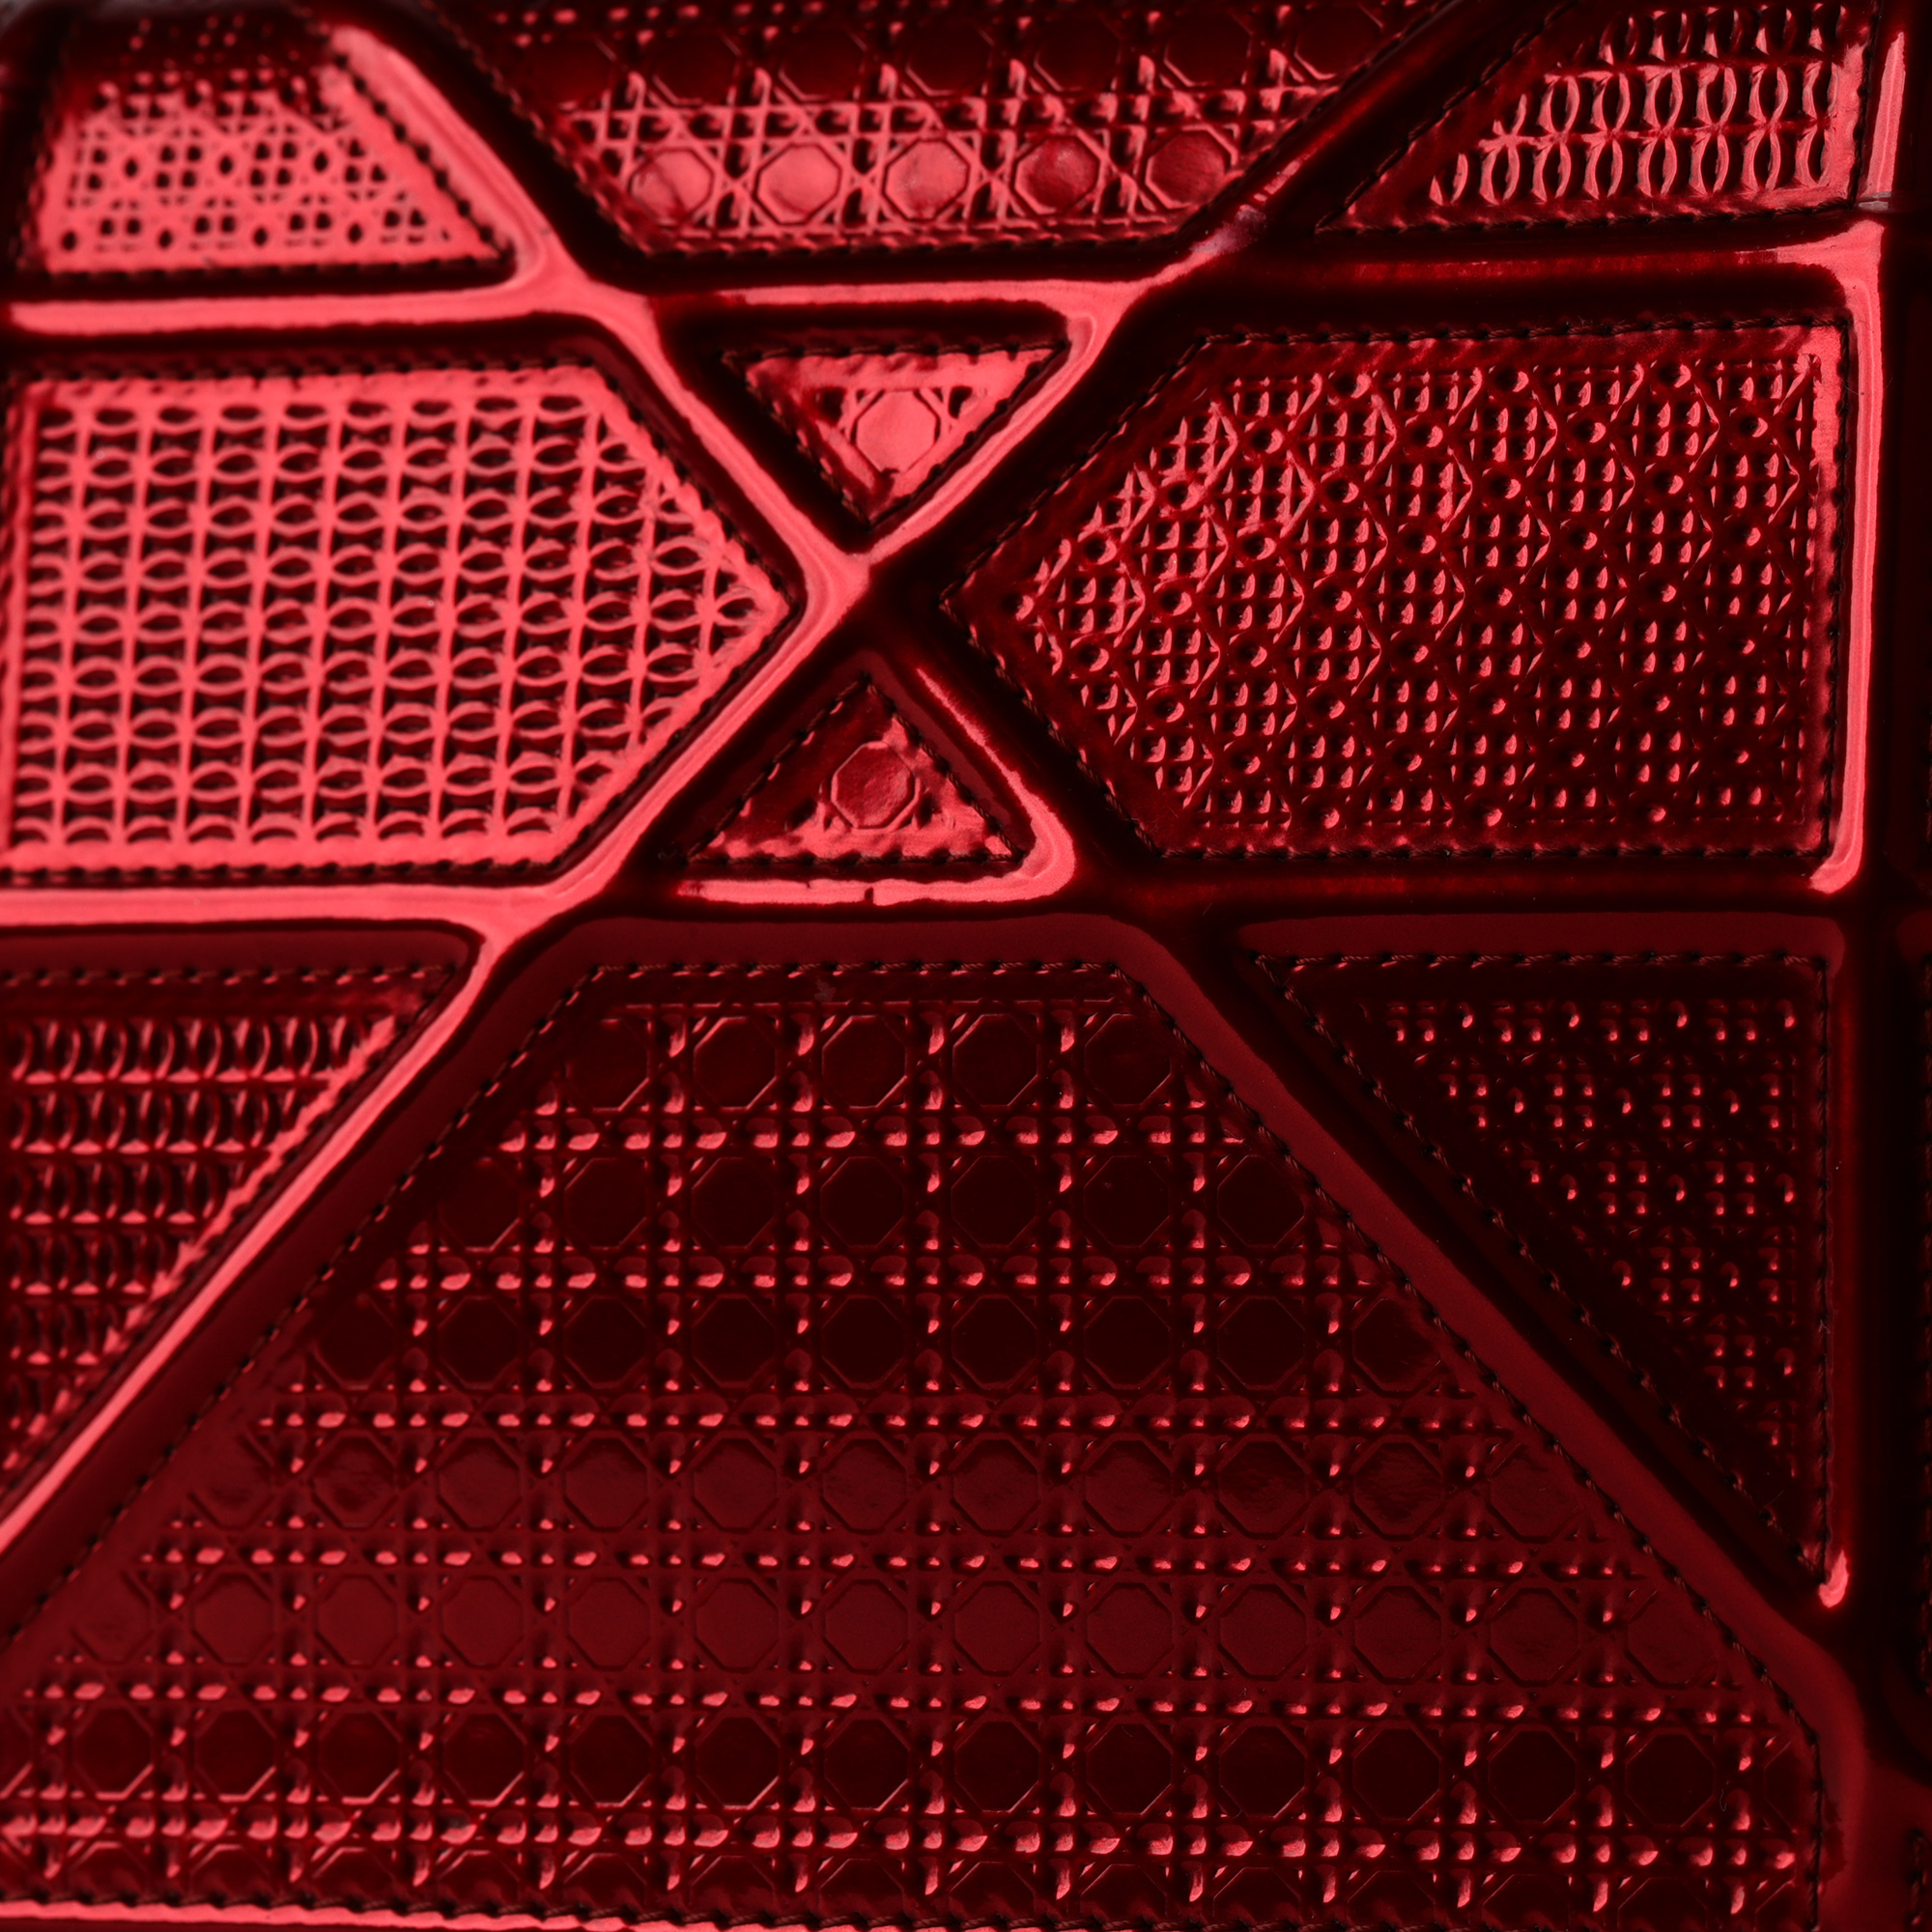 Dior Red Micro Cannage WOC Diorama Bag